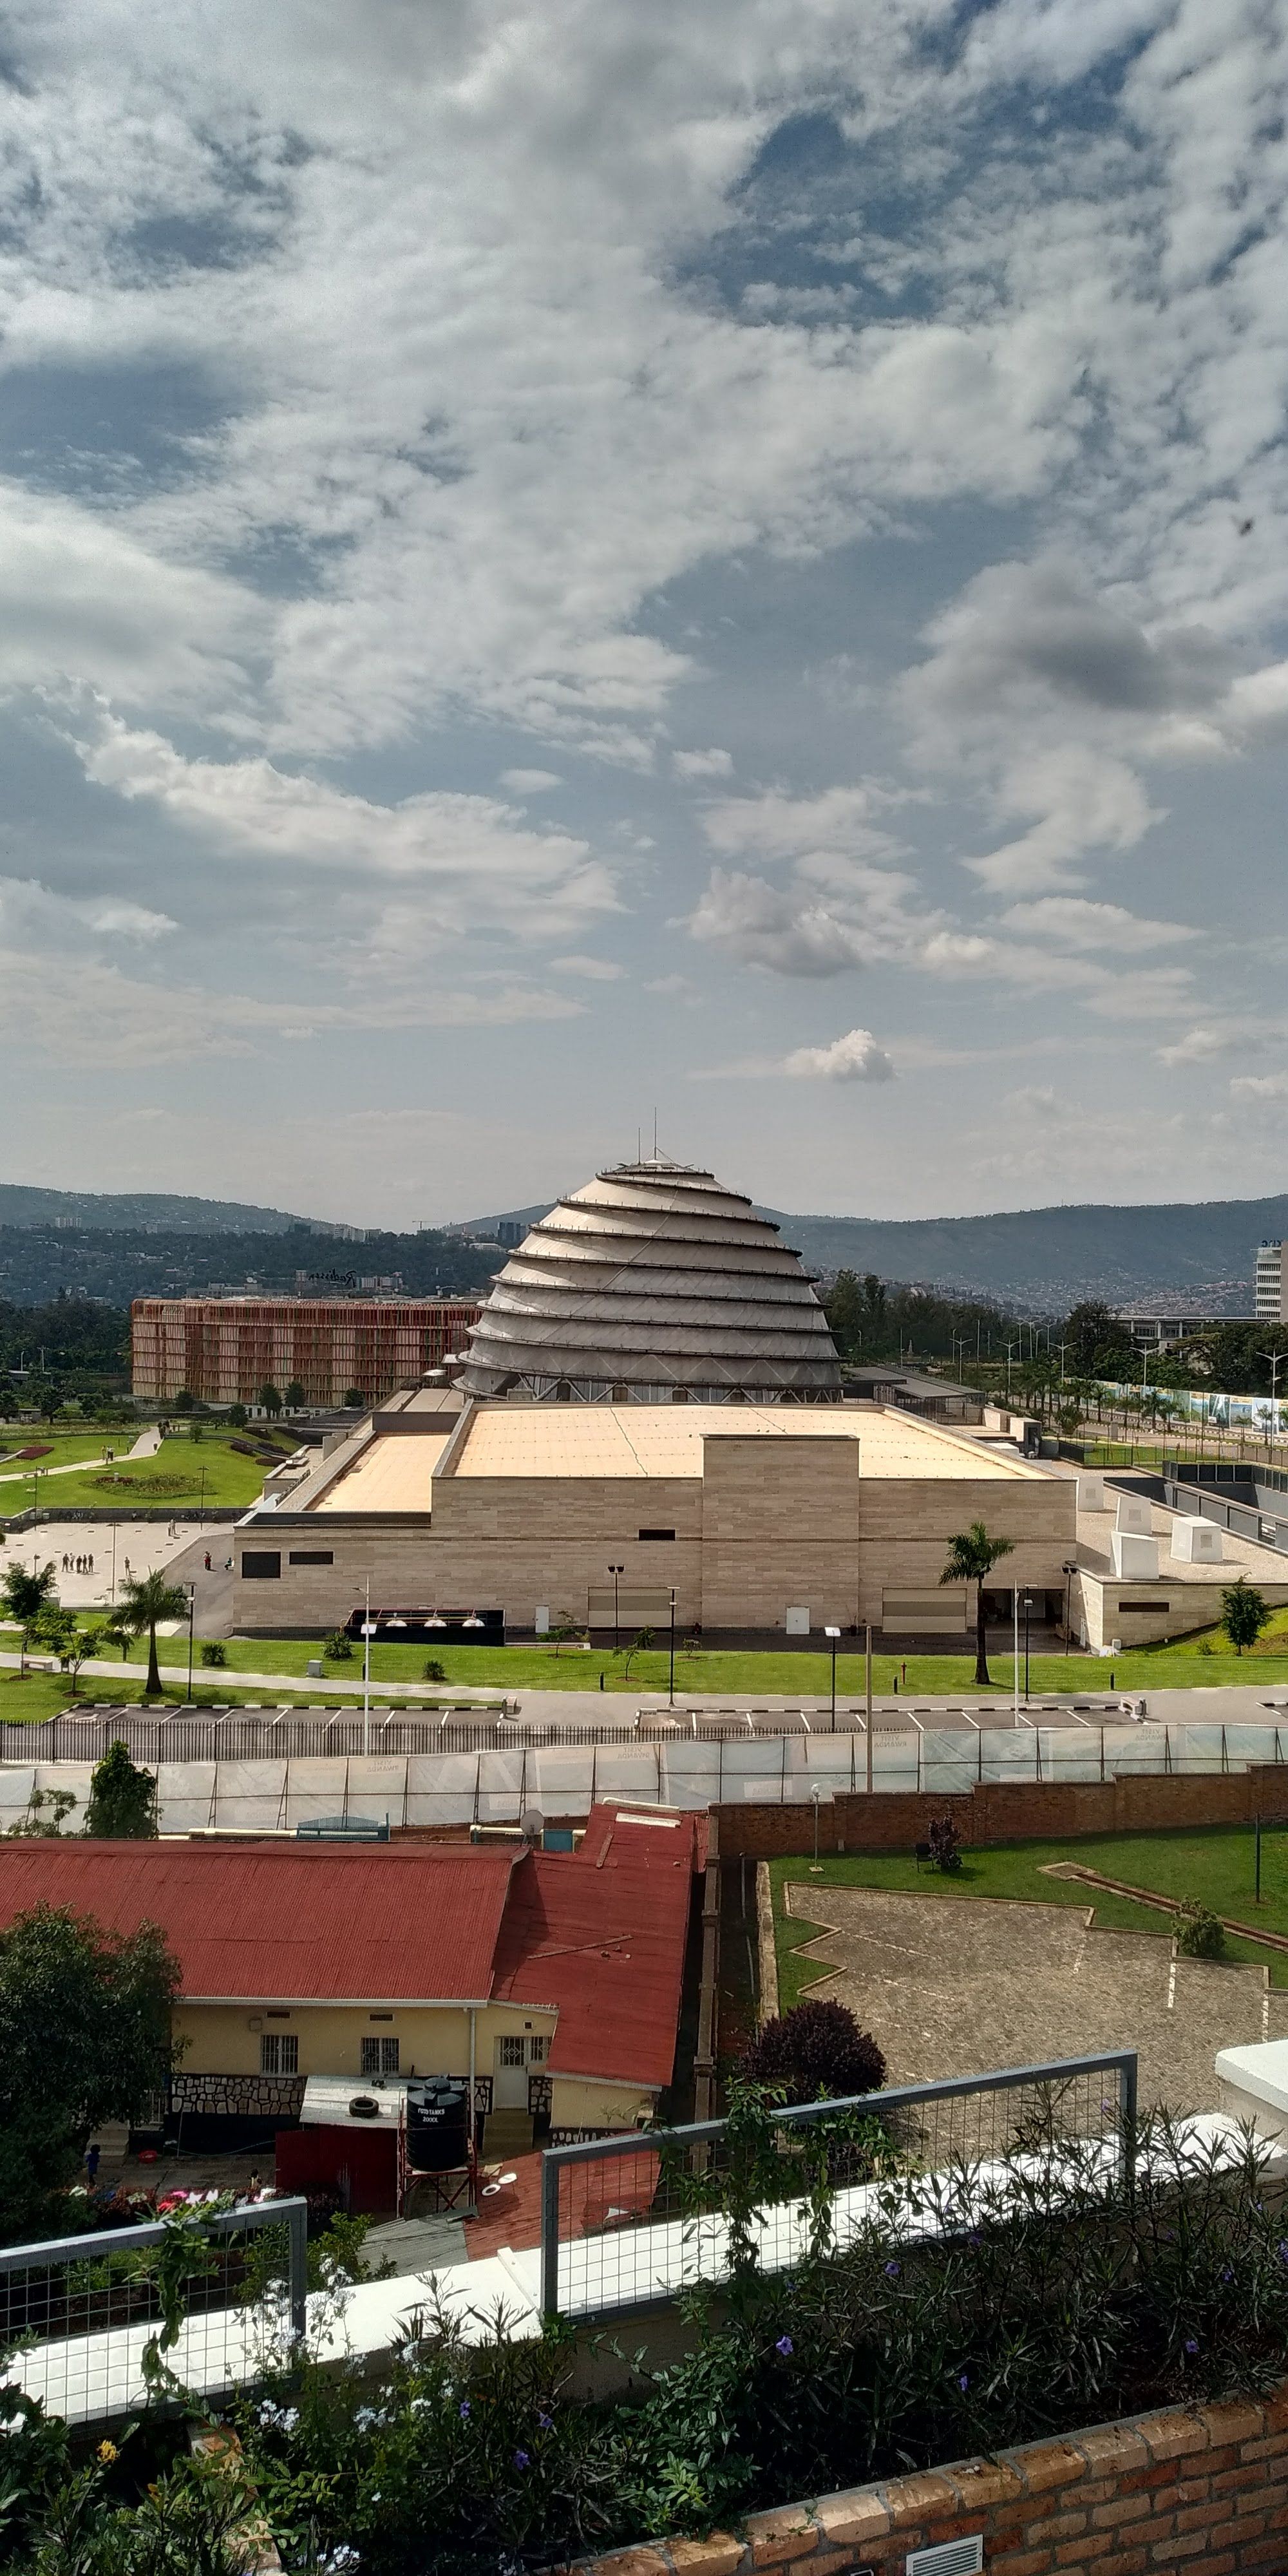 Kigali Convention Center, Kigali (Photo by RobAo)